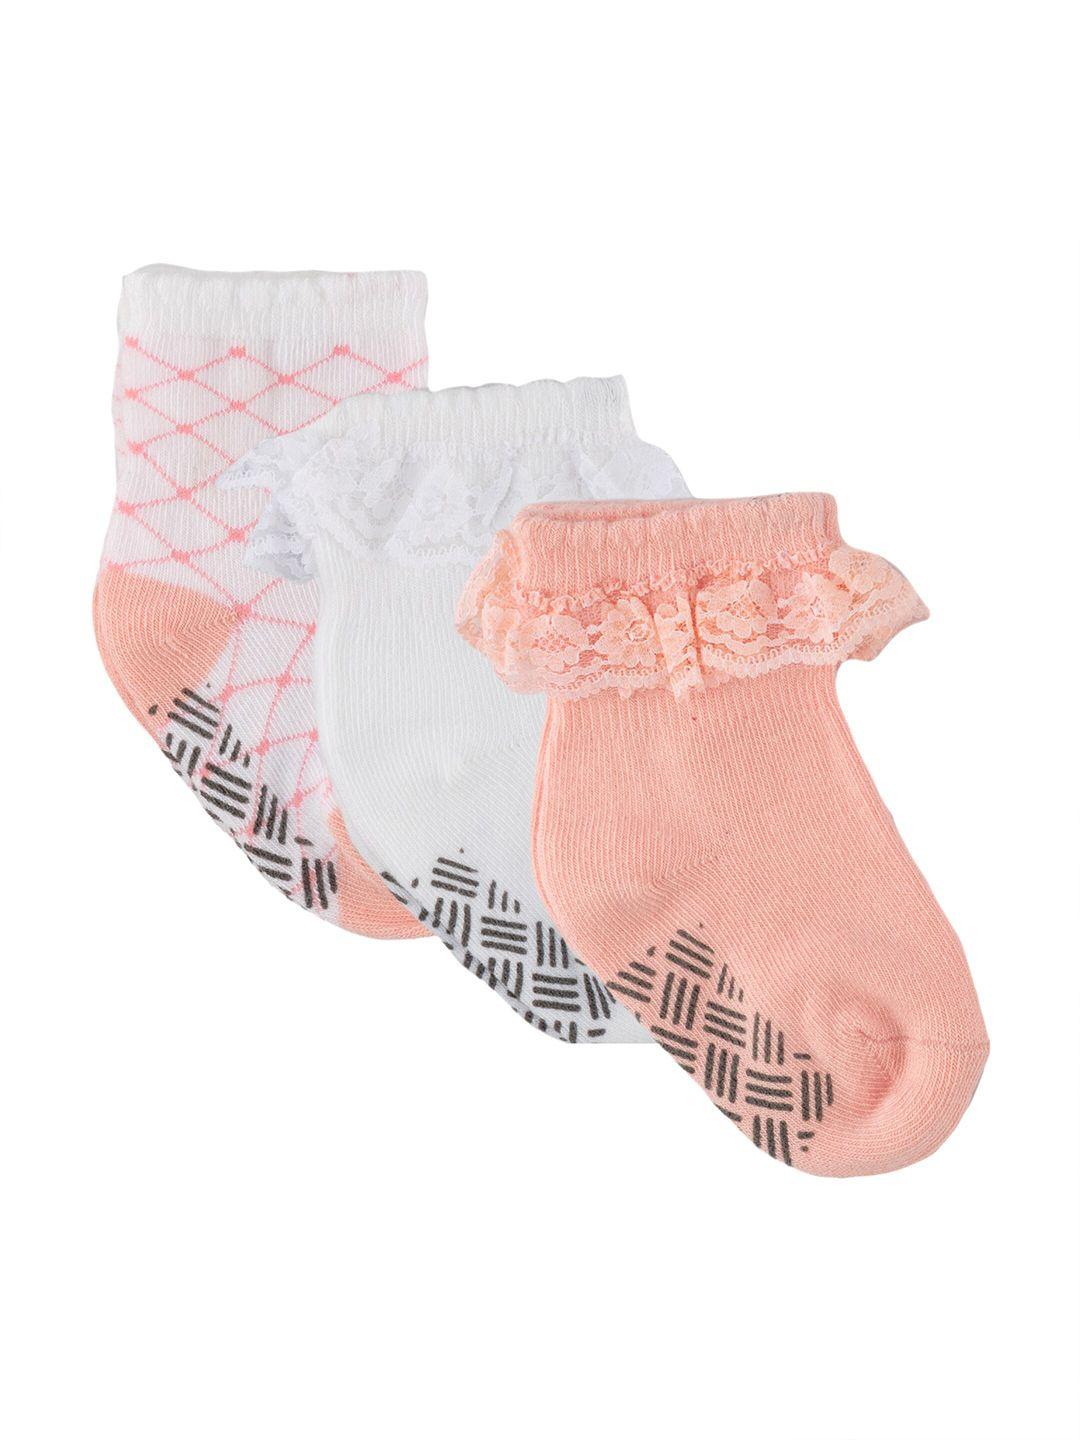 Nuluv Girls Pack of 3 Assorted Ankle-Length Socks